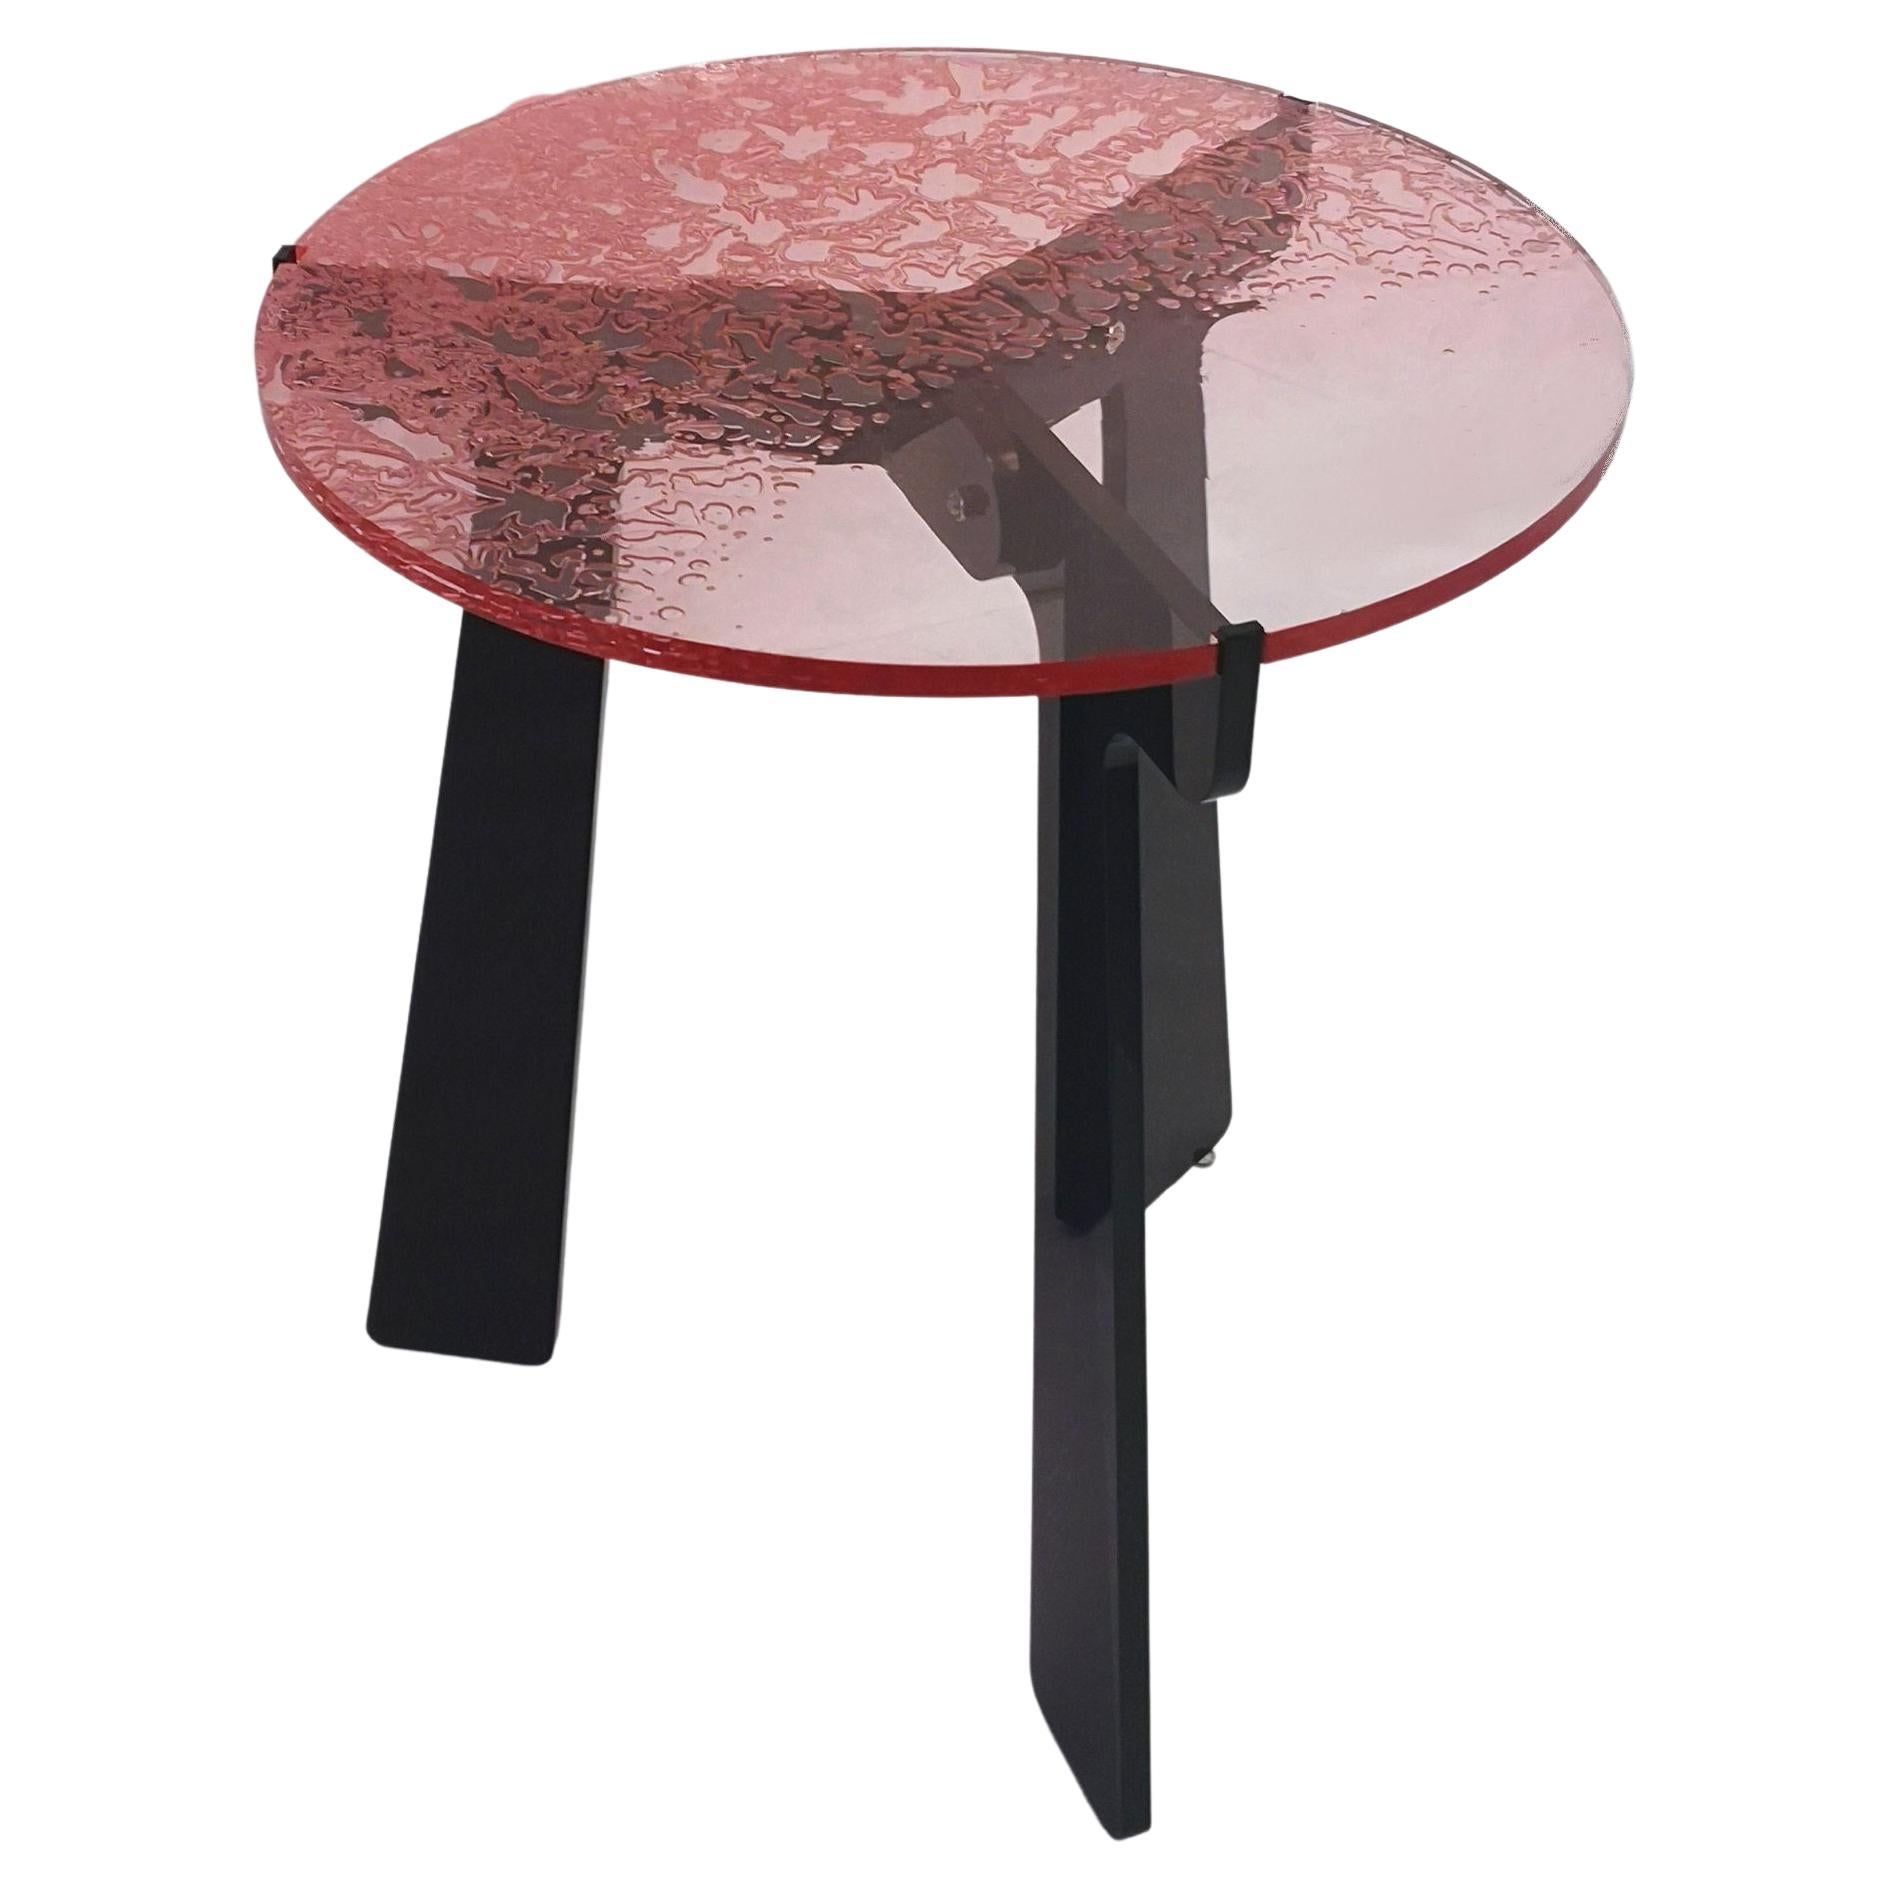 Mini table d'appoint croquis en acrylique rose, Roberto Giacomucci, 2021